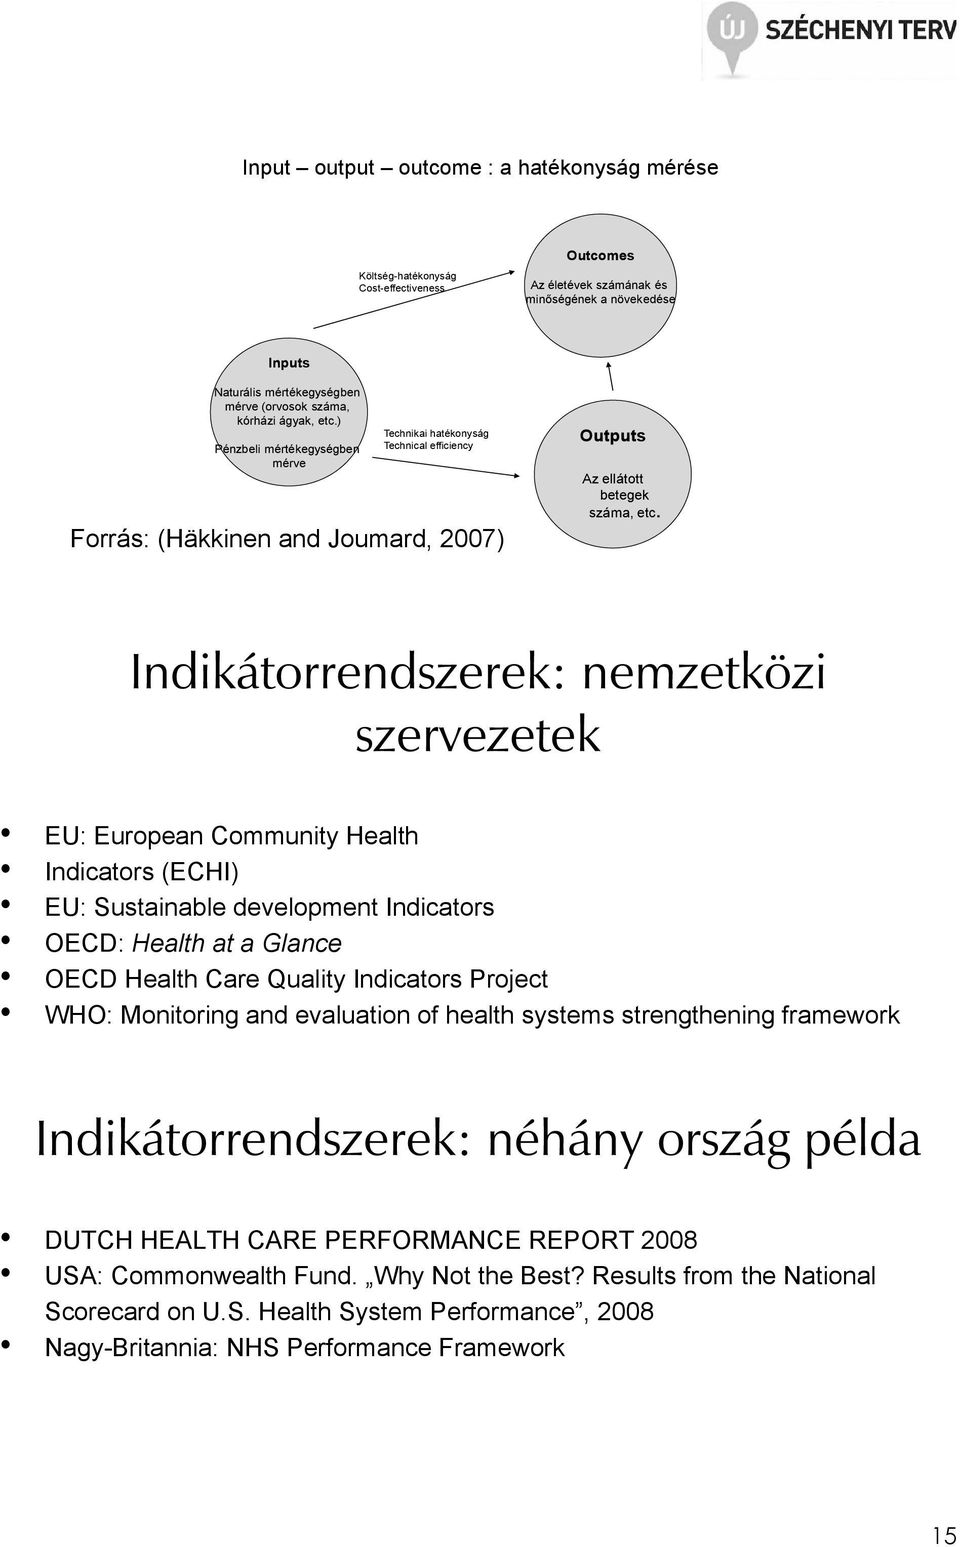 Indikátorrendszerek: nemzetközi szervezetek EU: European Community Health Indicators (ECHI) EU: Sustainable development Indicators OECD: Health at a Glance OECD Health Care Quality Indicators Project